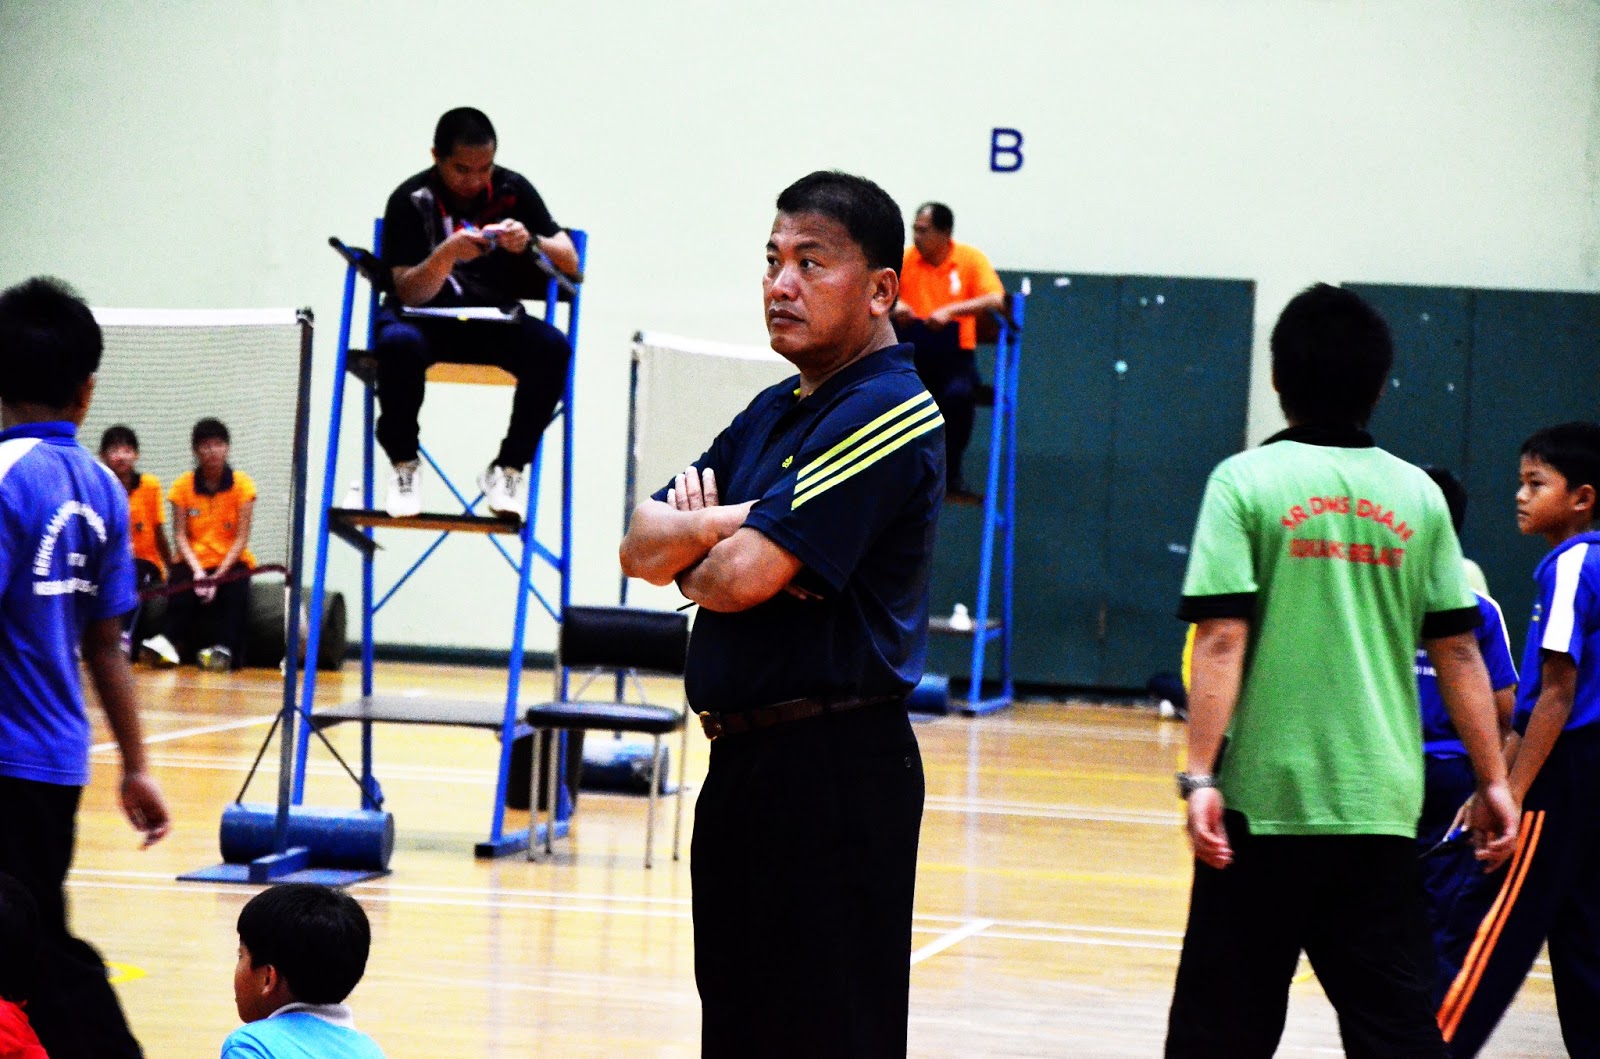 Setia Alam Badminton Court  Yosin Badminton Court Kampung Subang